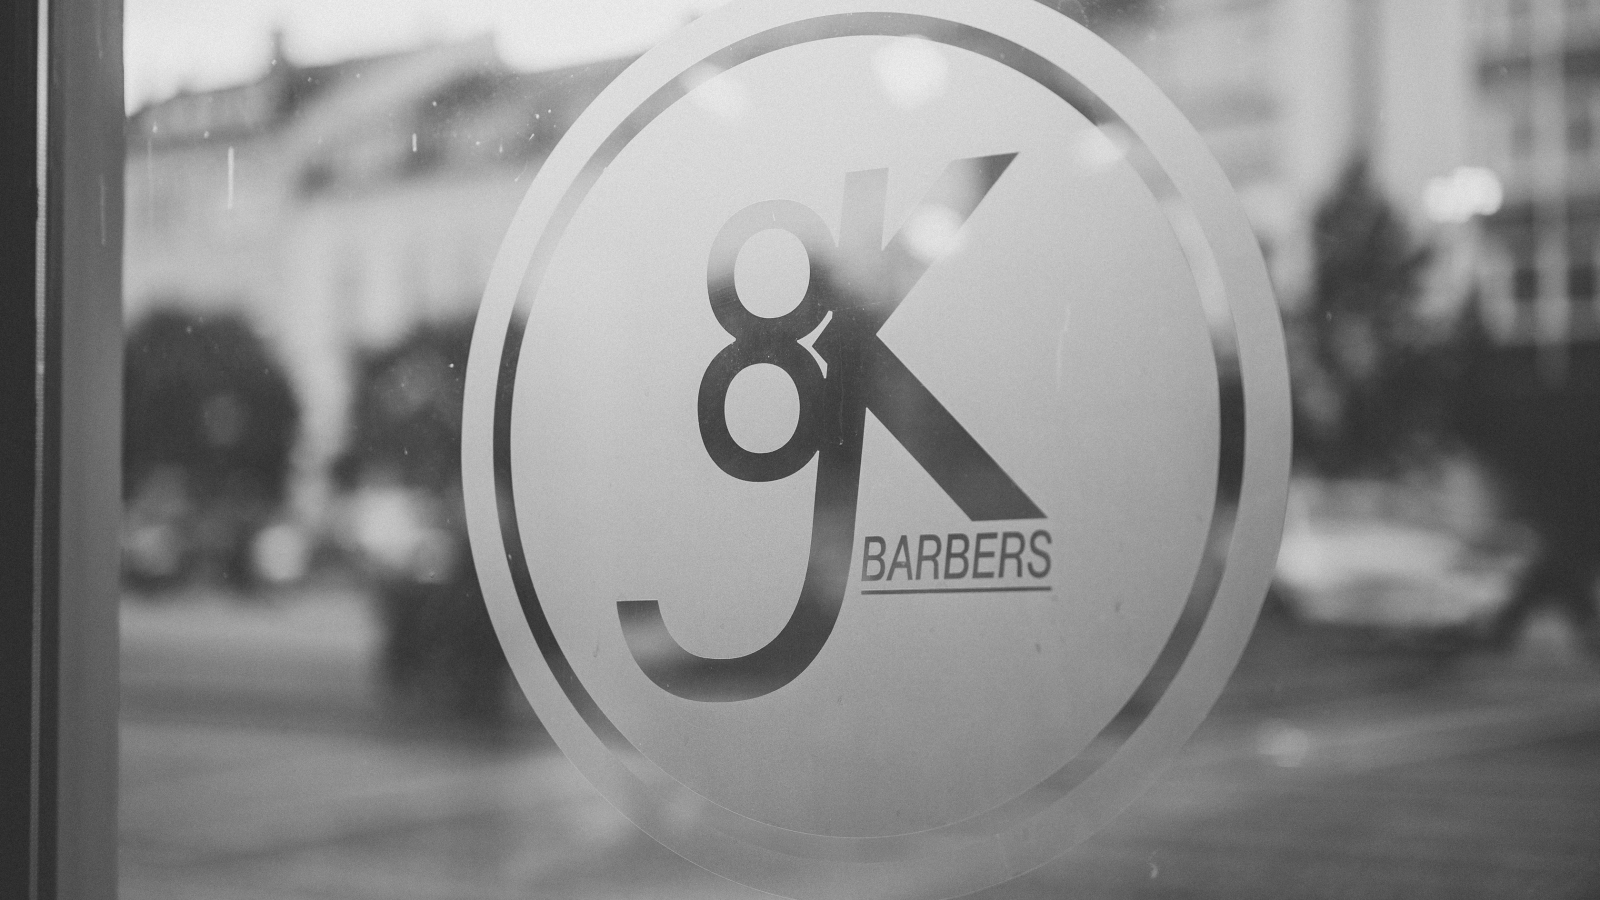 JK Barbers